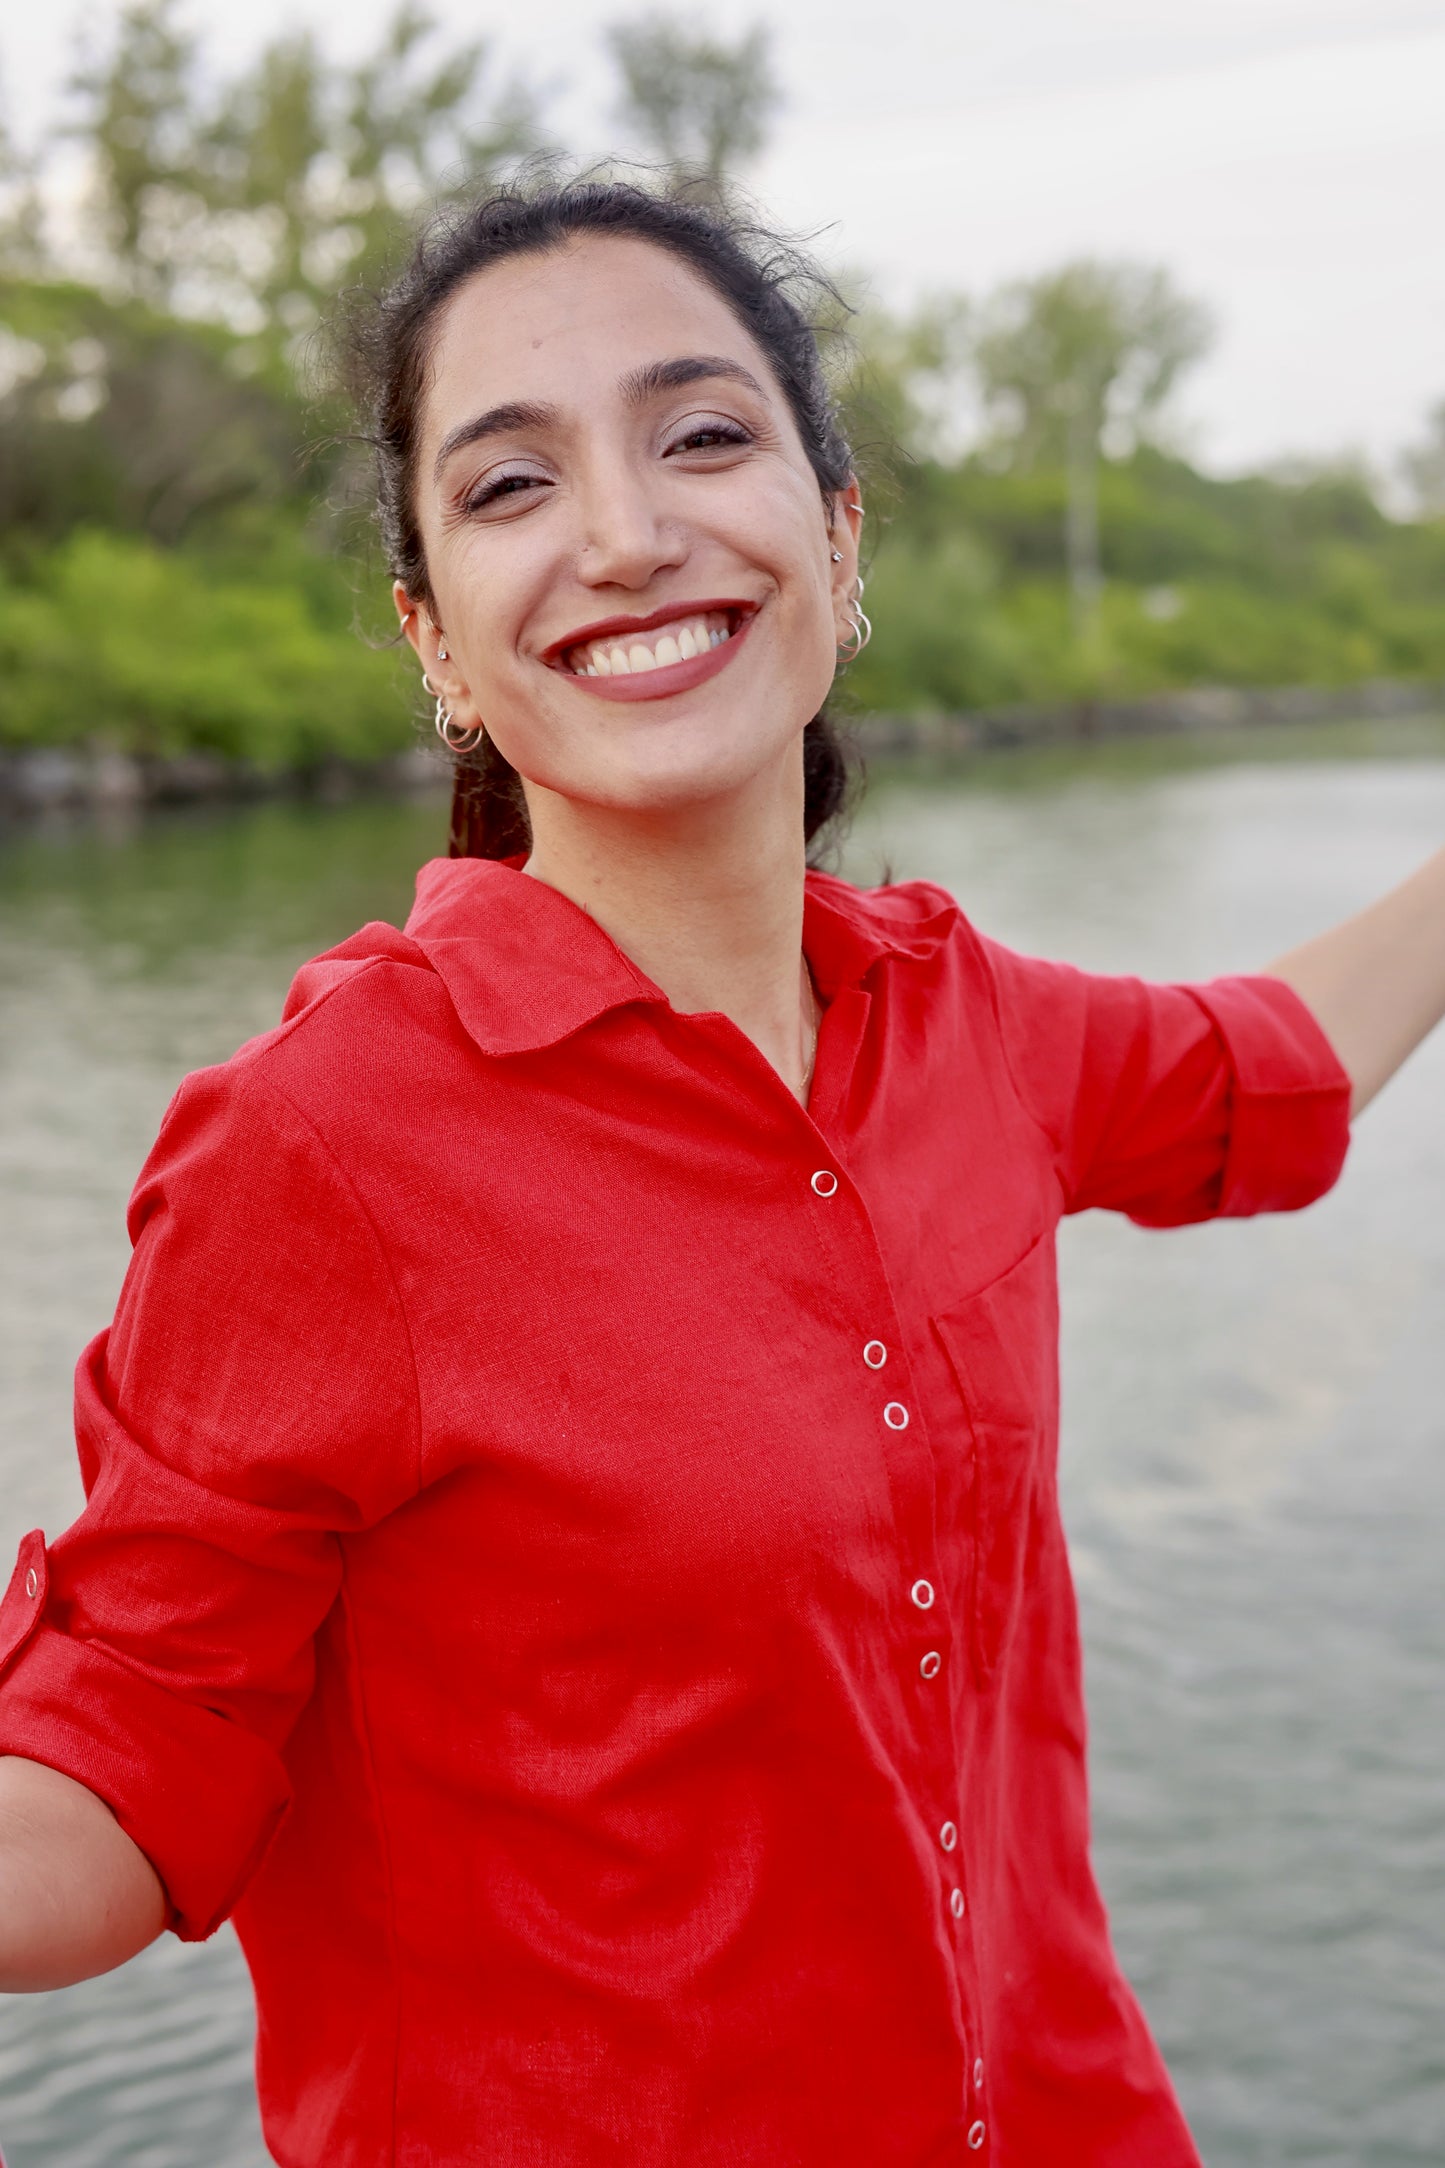 Long Sleeve Red Linen Shirt by ELZI.ca worn by Sanaz Firouzi.